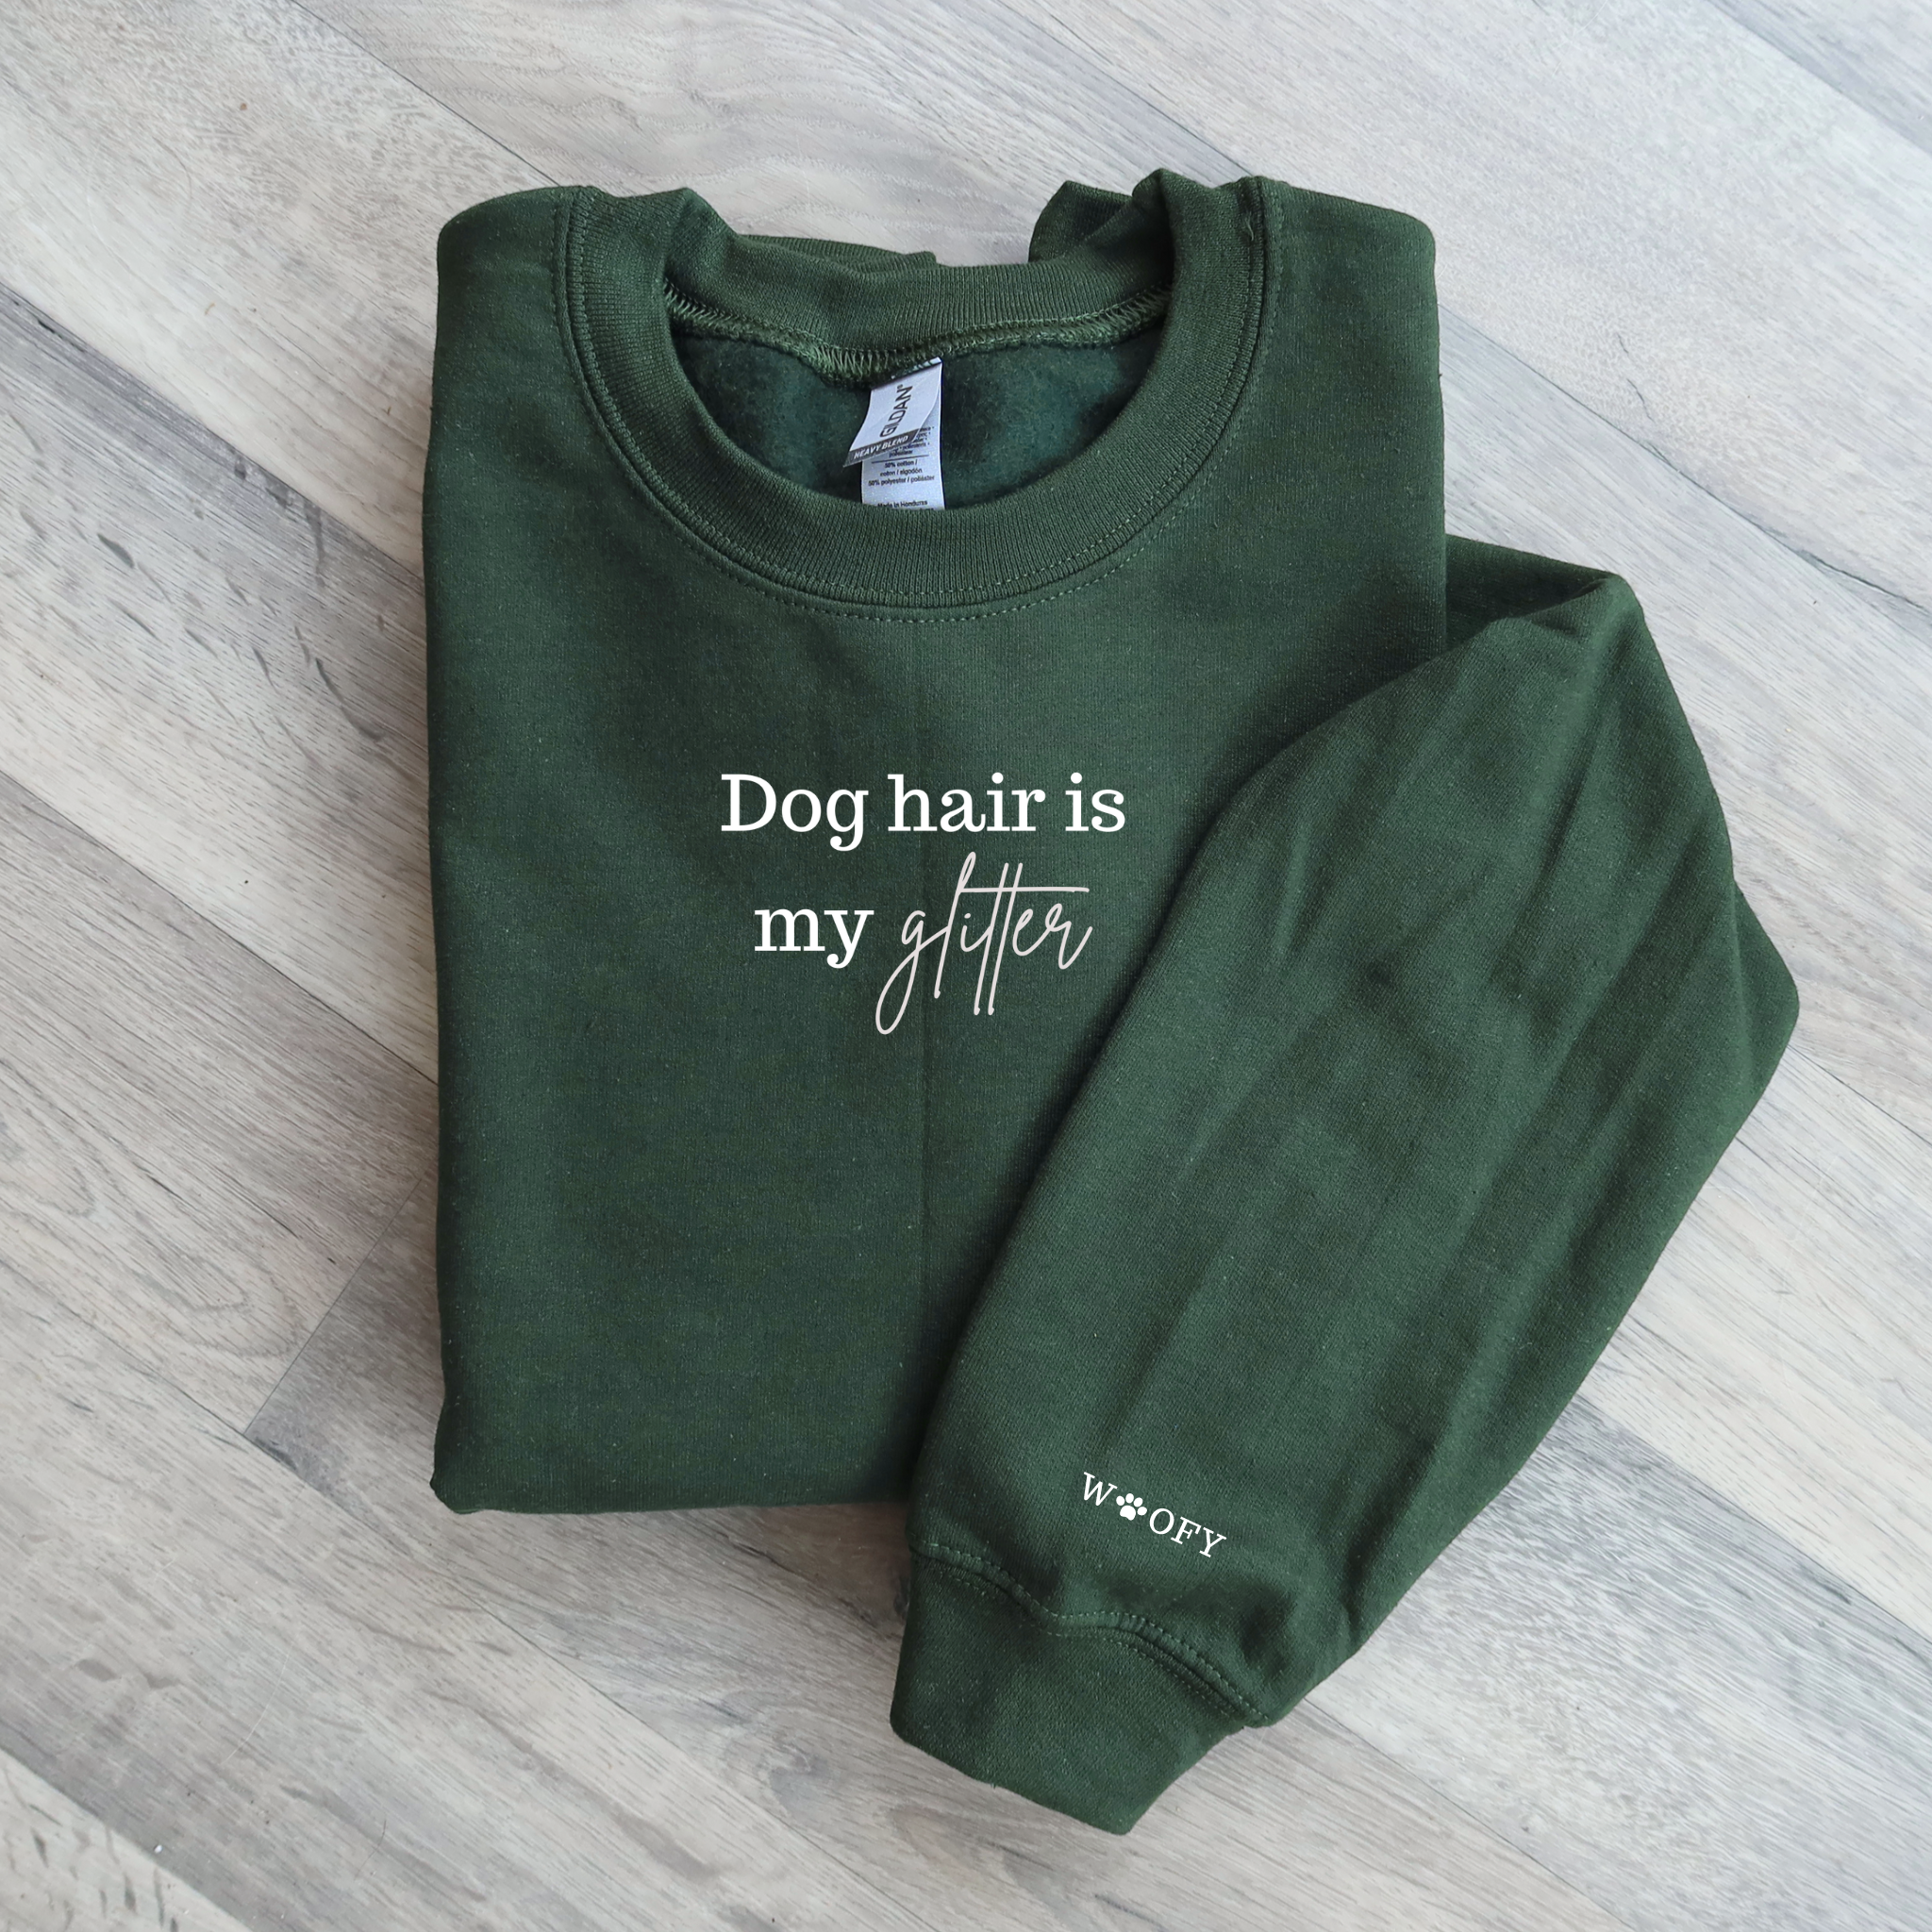 'Dog hair is my glitter' sweatshirt